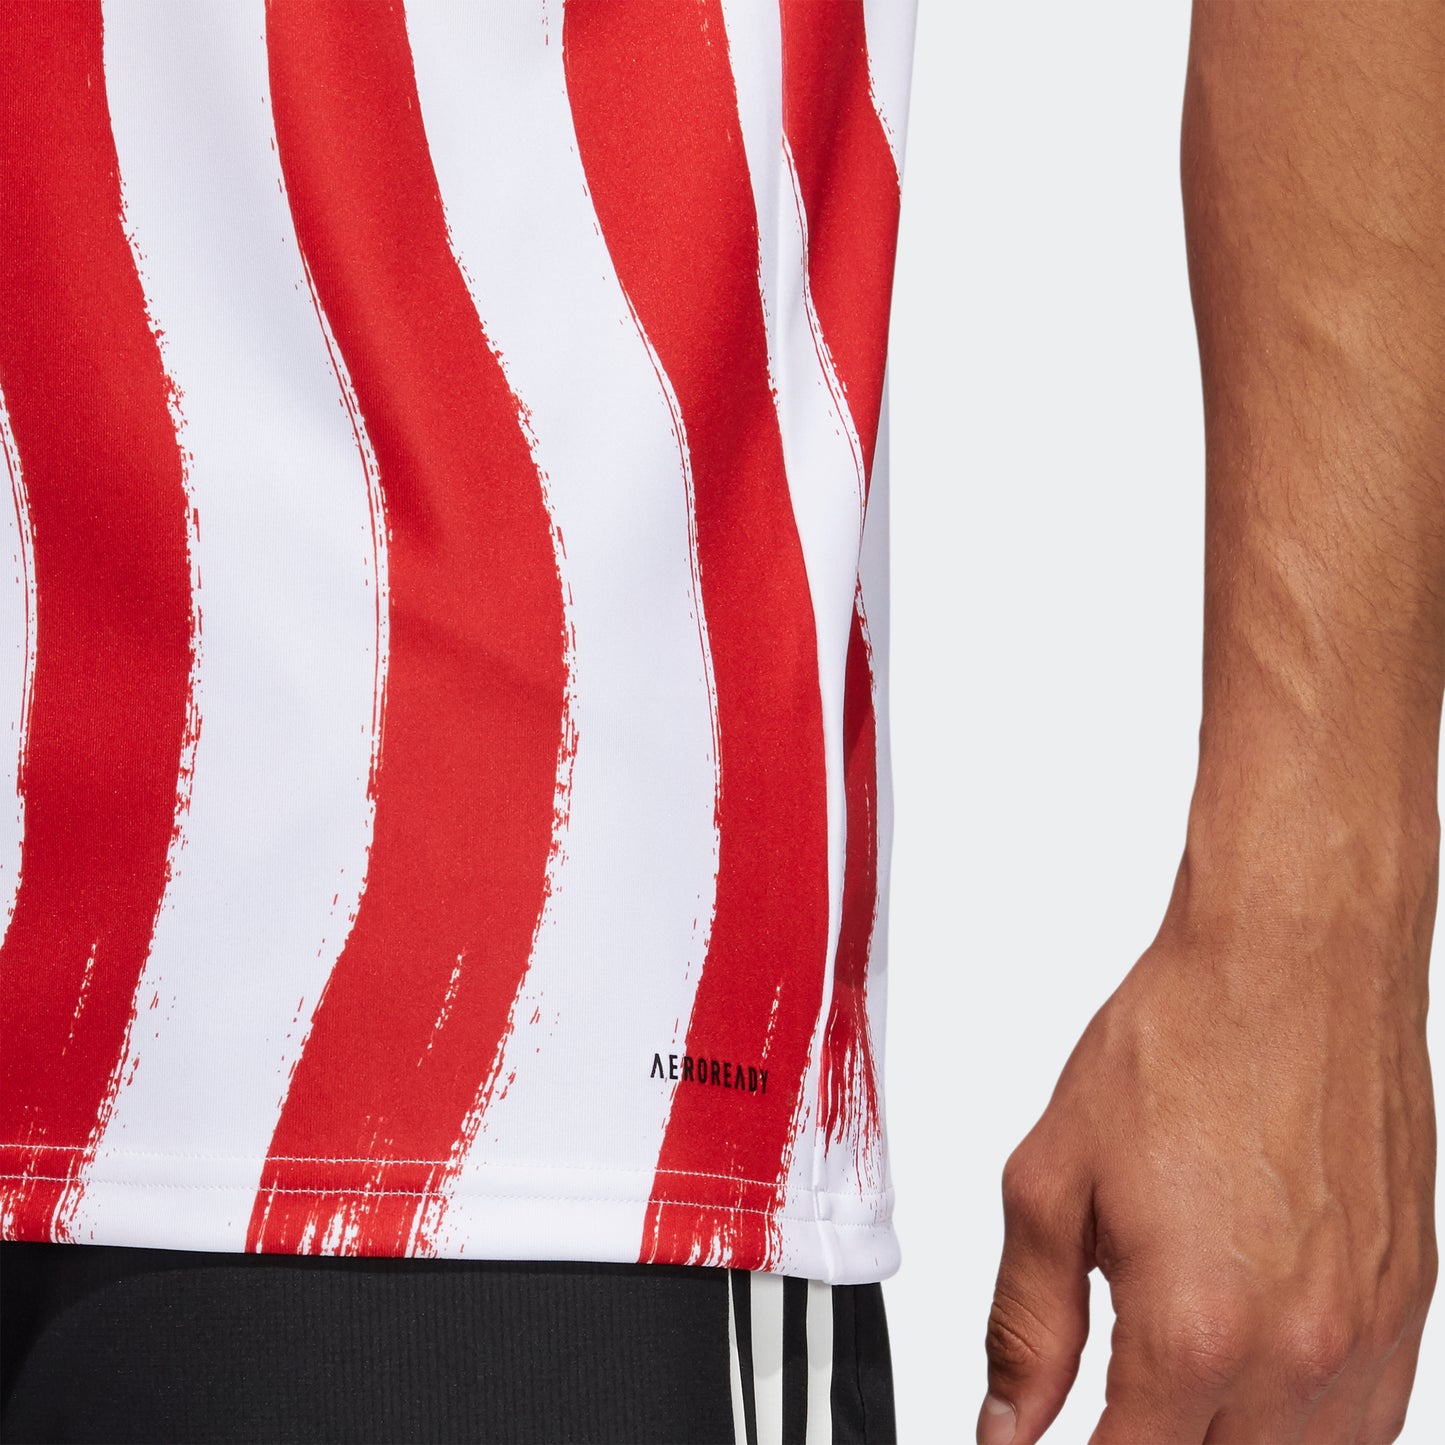 adidas MLS AMERICANA PREMATCH Soccer Jersey | Red-White-Blue | Men's